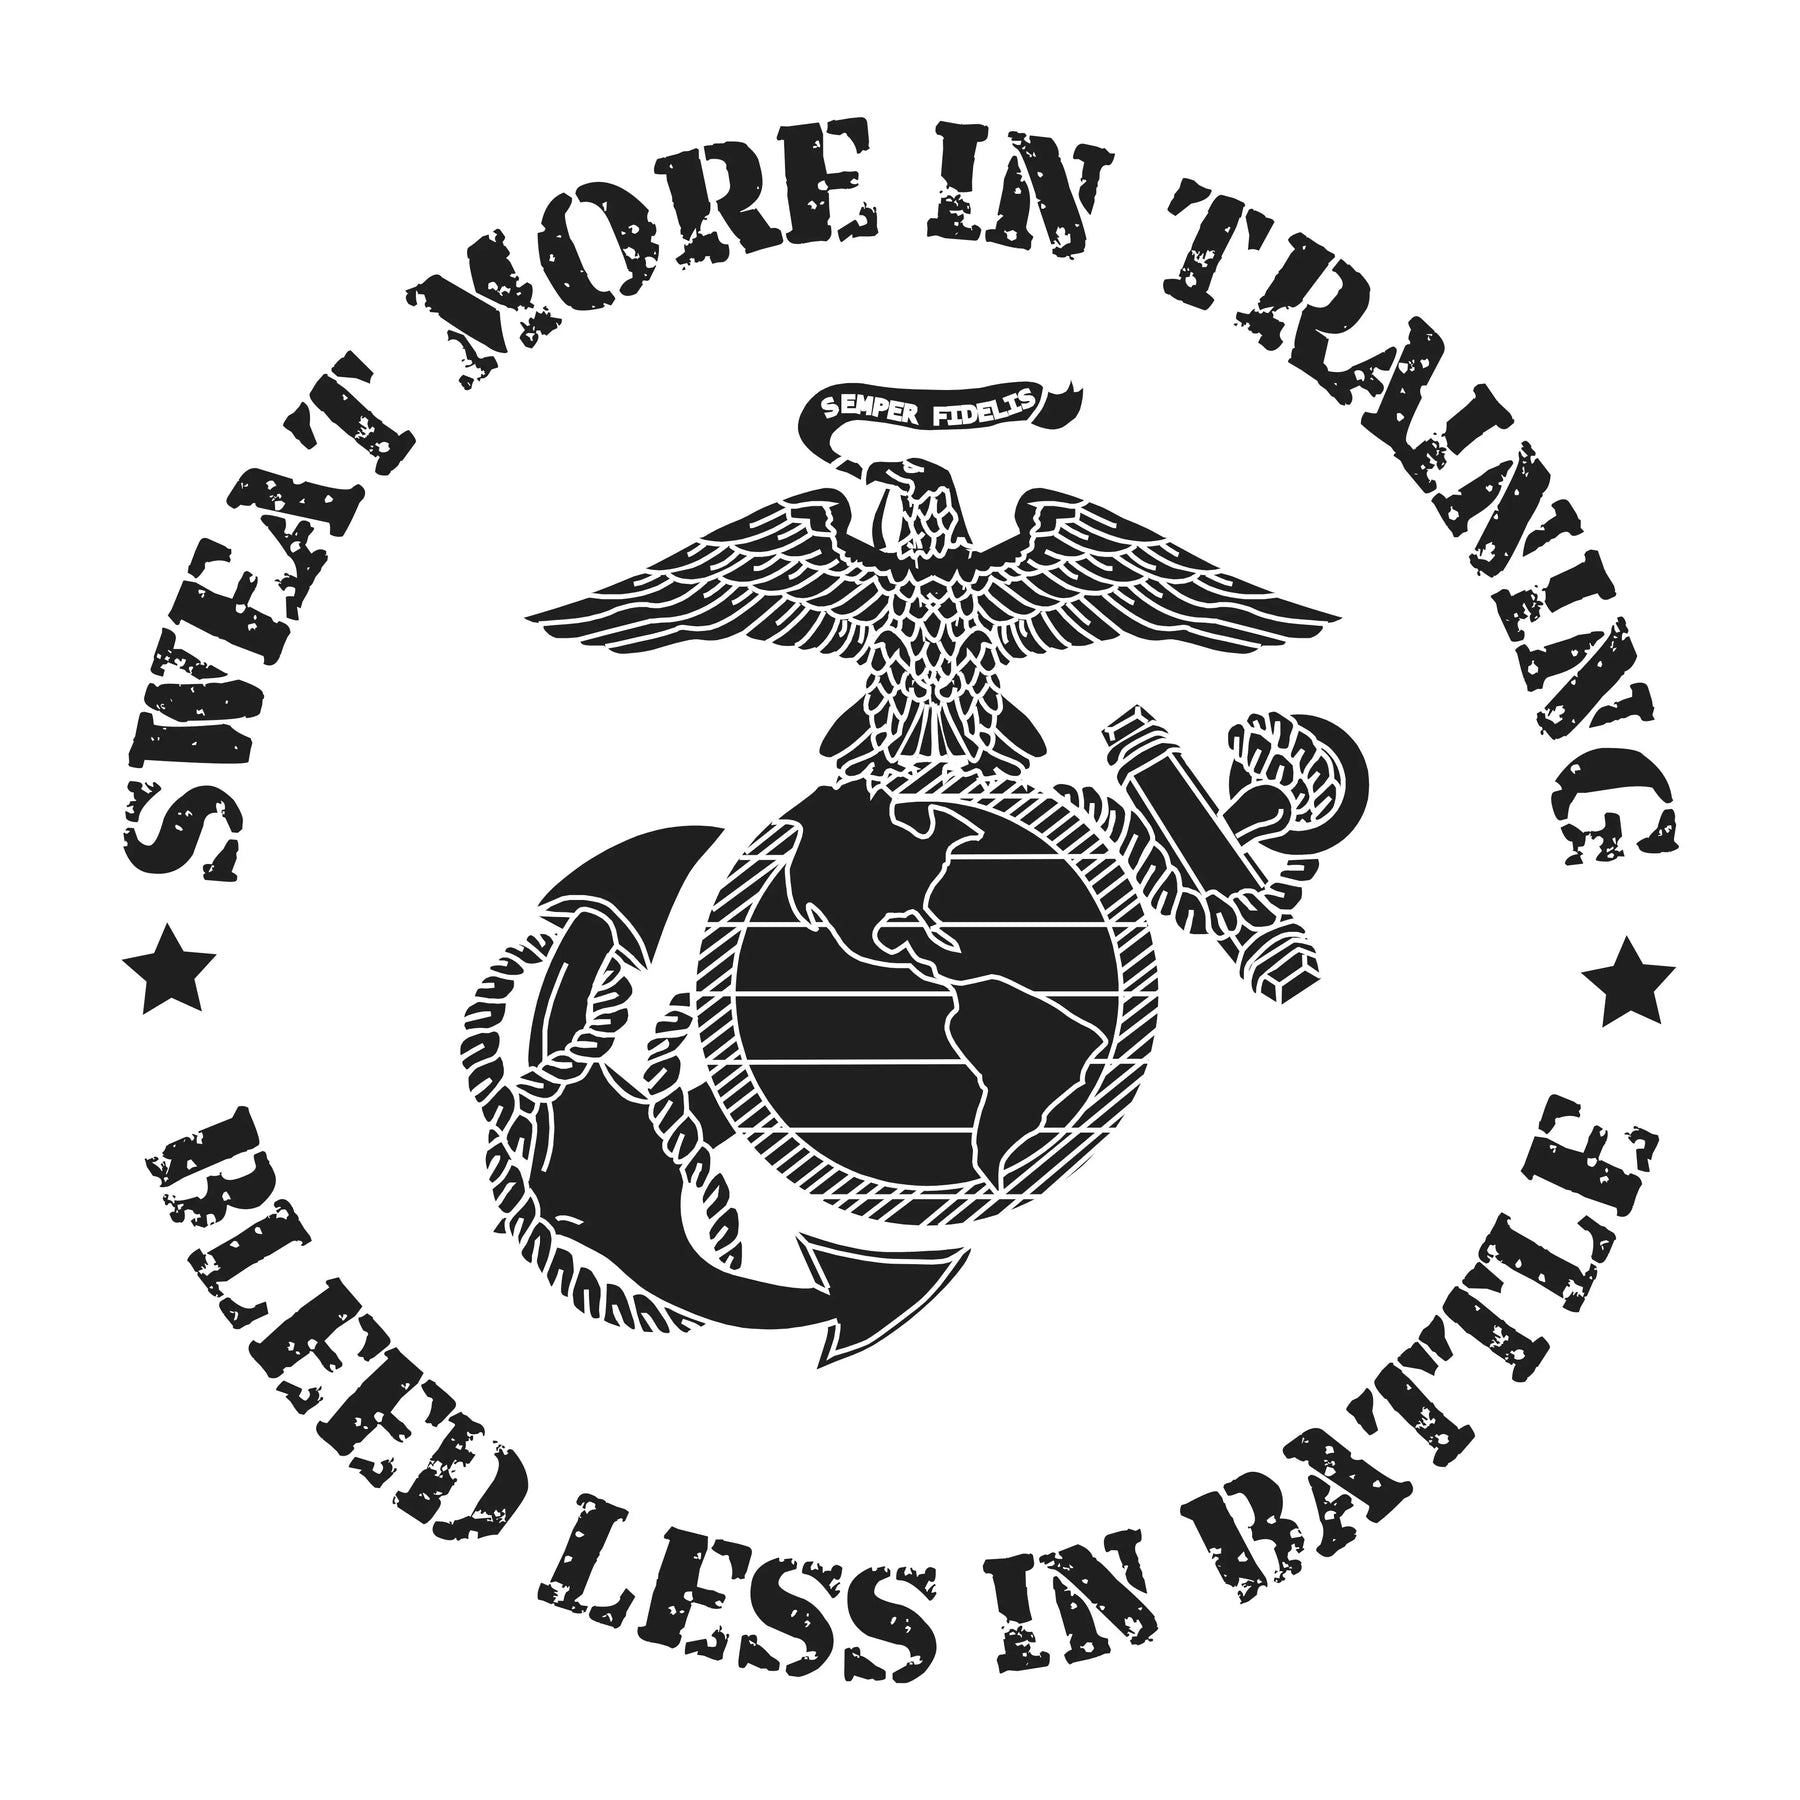 U.S. Marine Corps Sweat More 2-Sided Tee